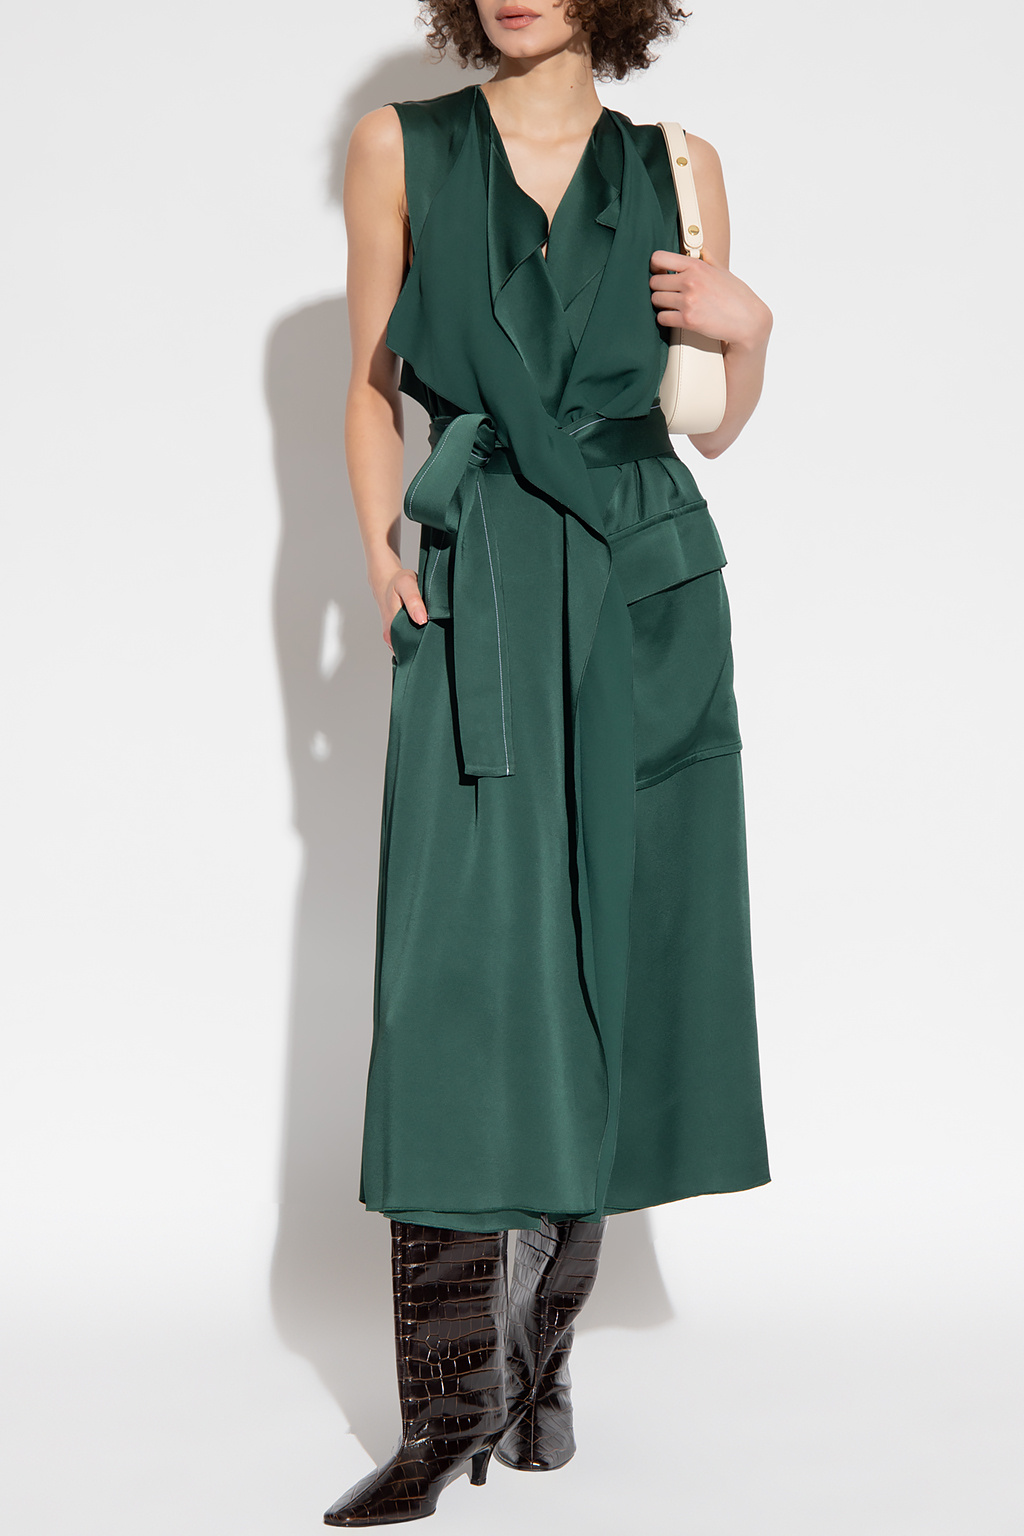 GenesinlifeShops Germany - Green Belted dress Victoria Beckham - VERO MODA  Leggings 'INA' marrone